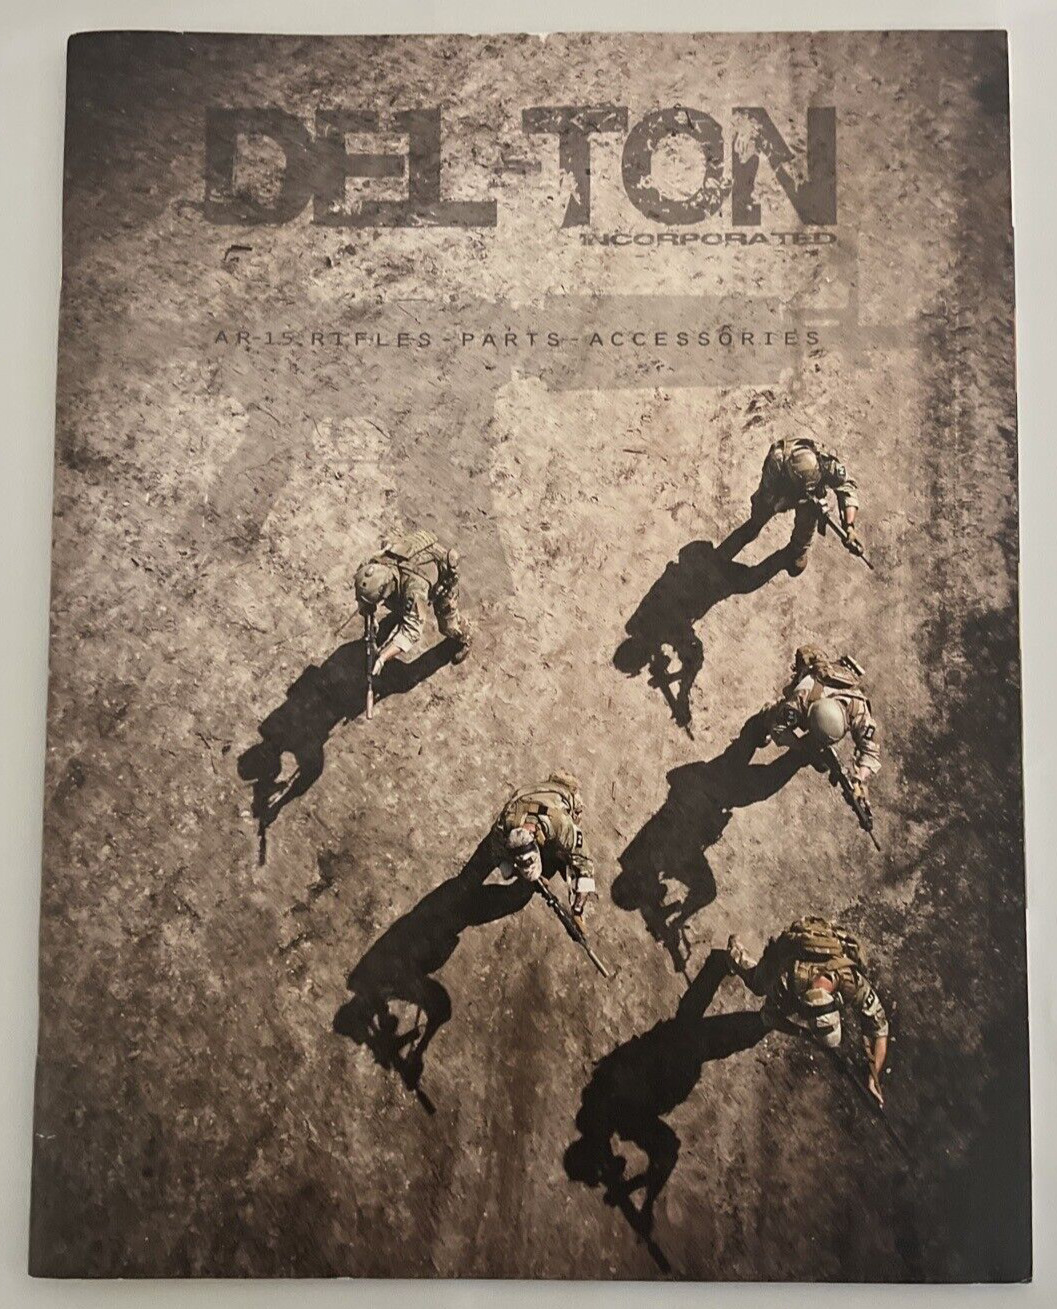 Del-Ton Delton Product Catalog From BOX 2016